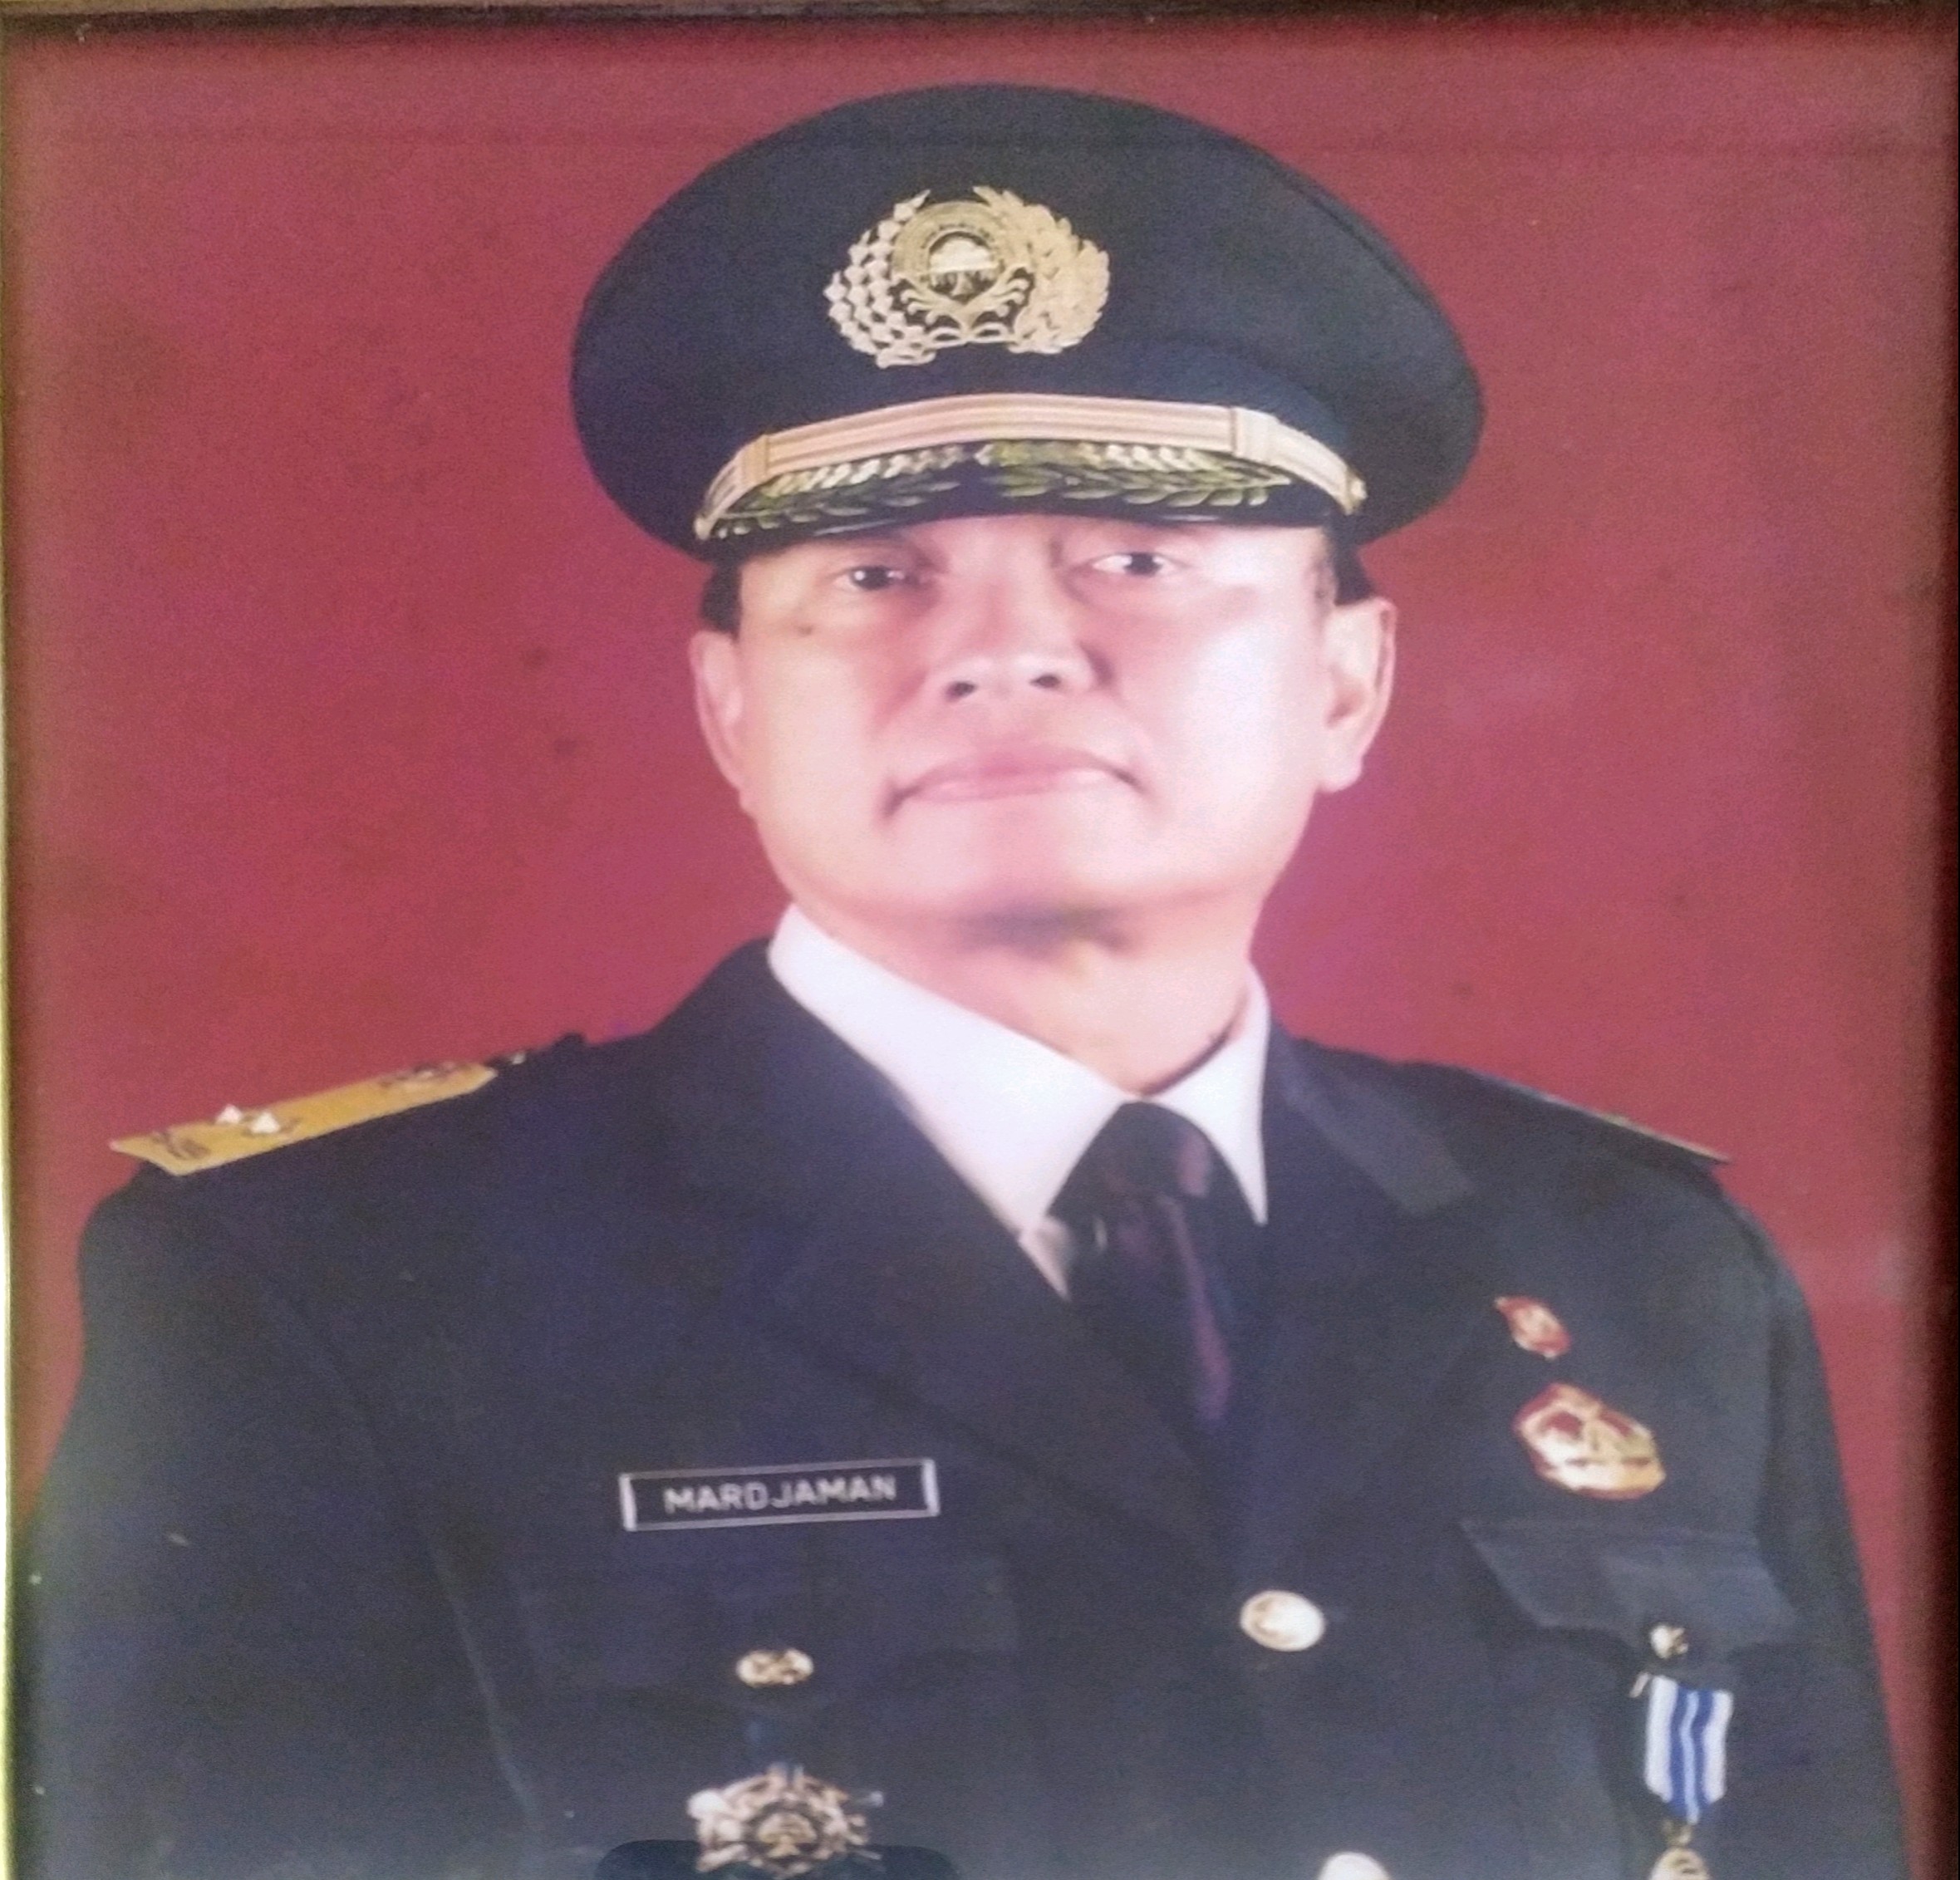 2000 2001 Drs. MARDJAMAN Bc.IP